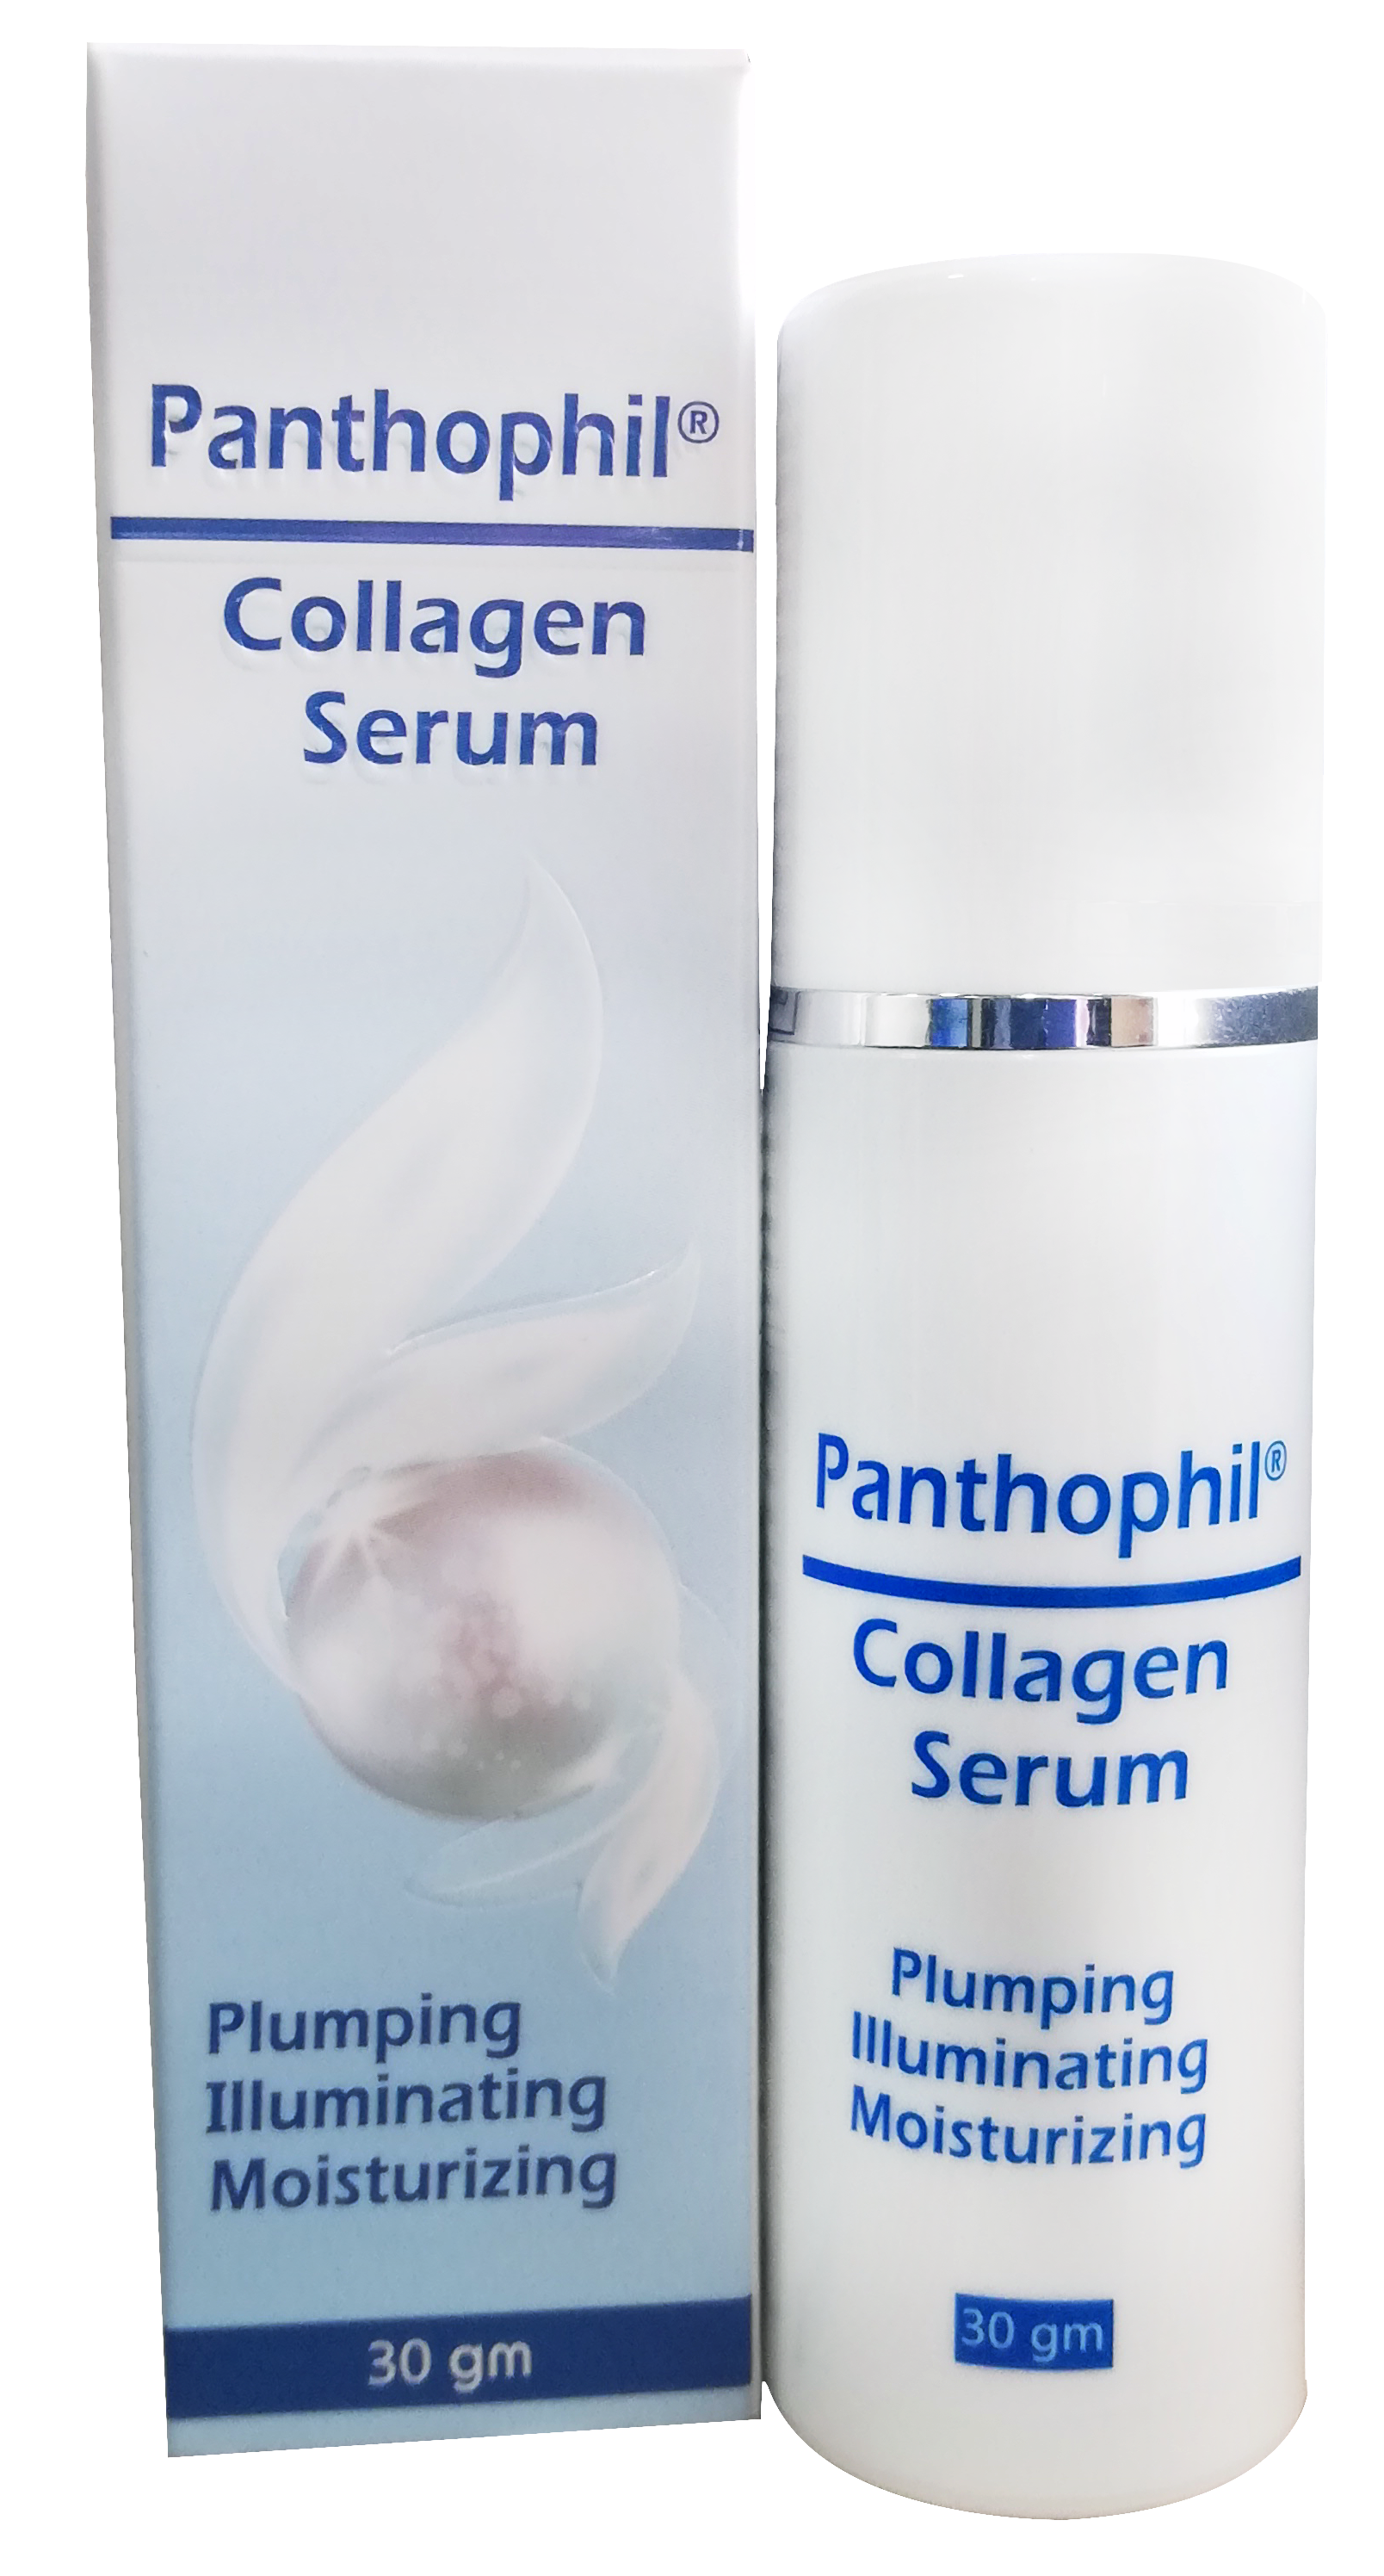 panthophil collagen.png - 3.5 MB